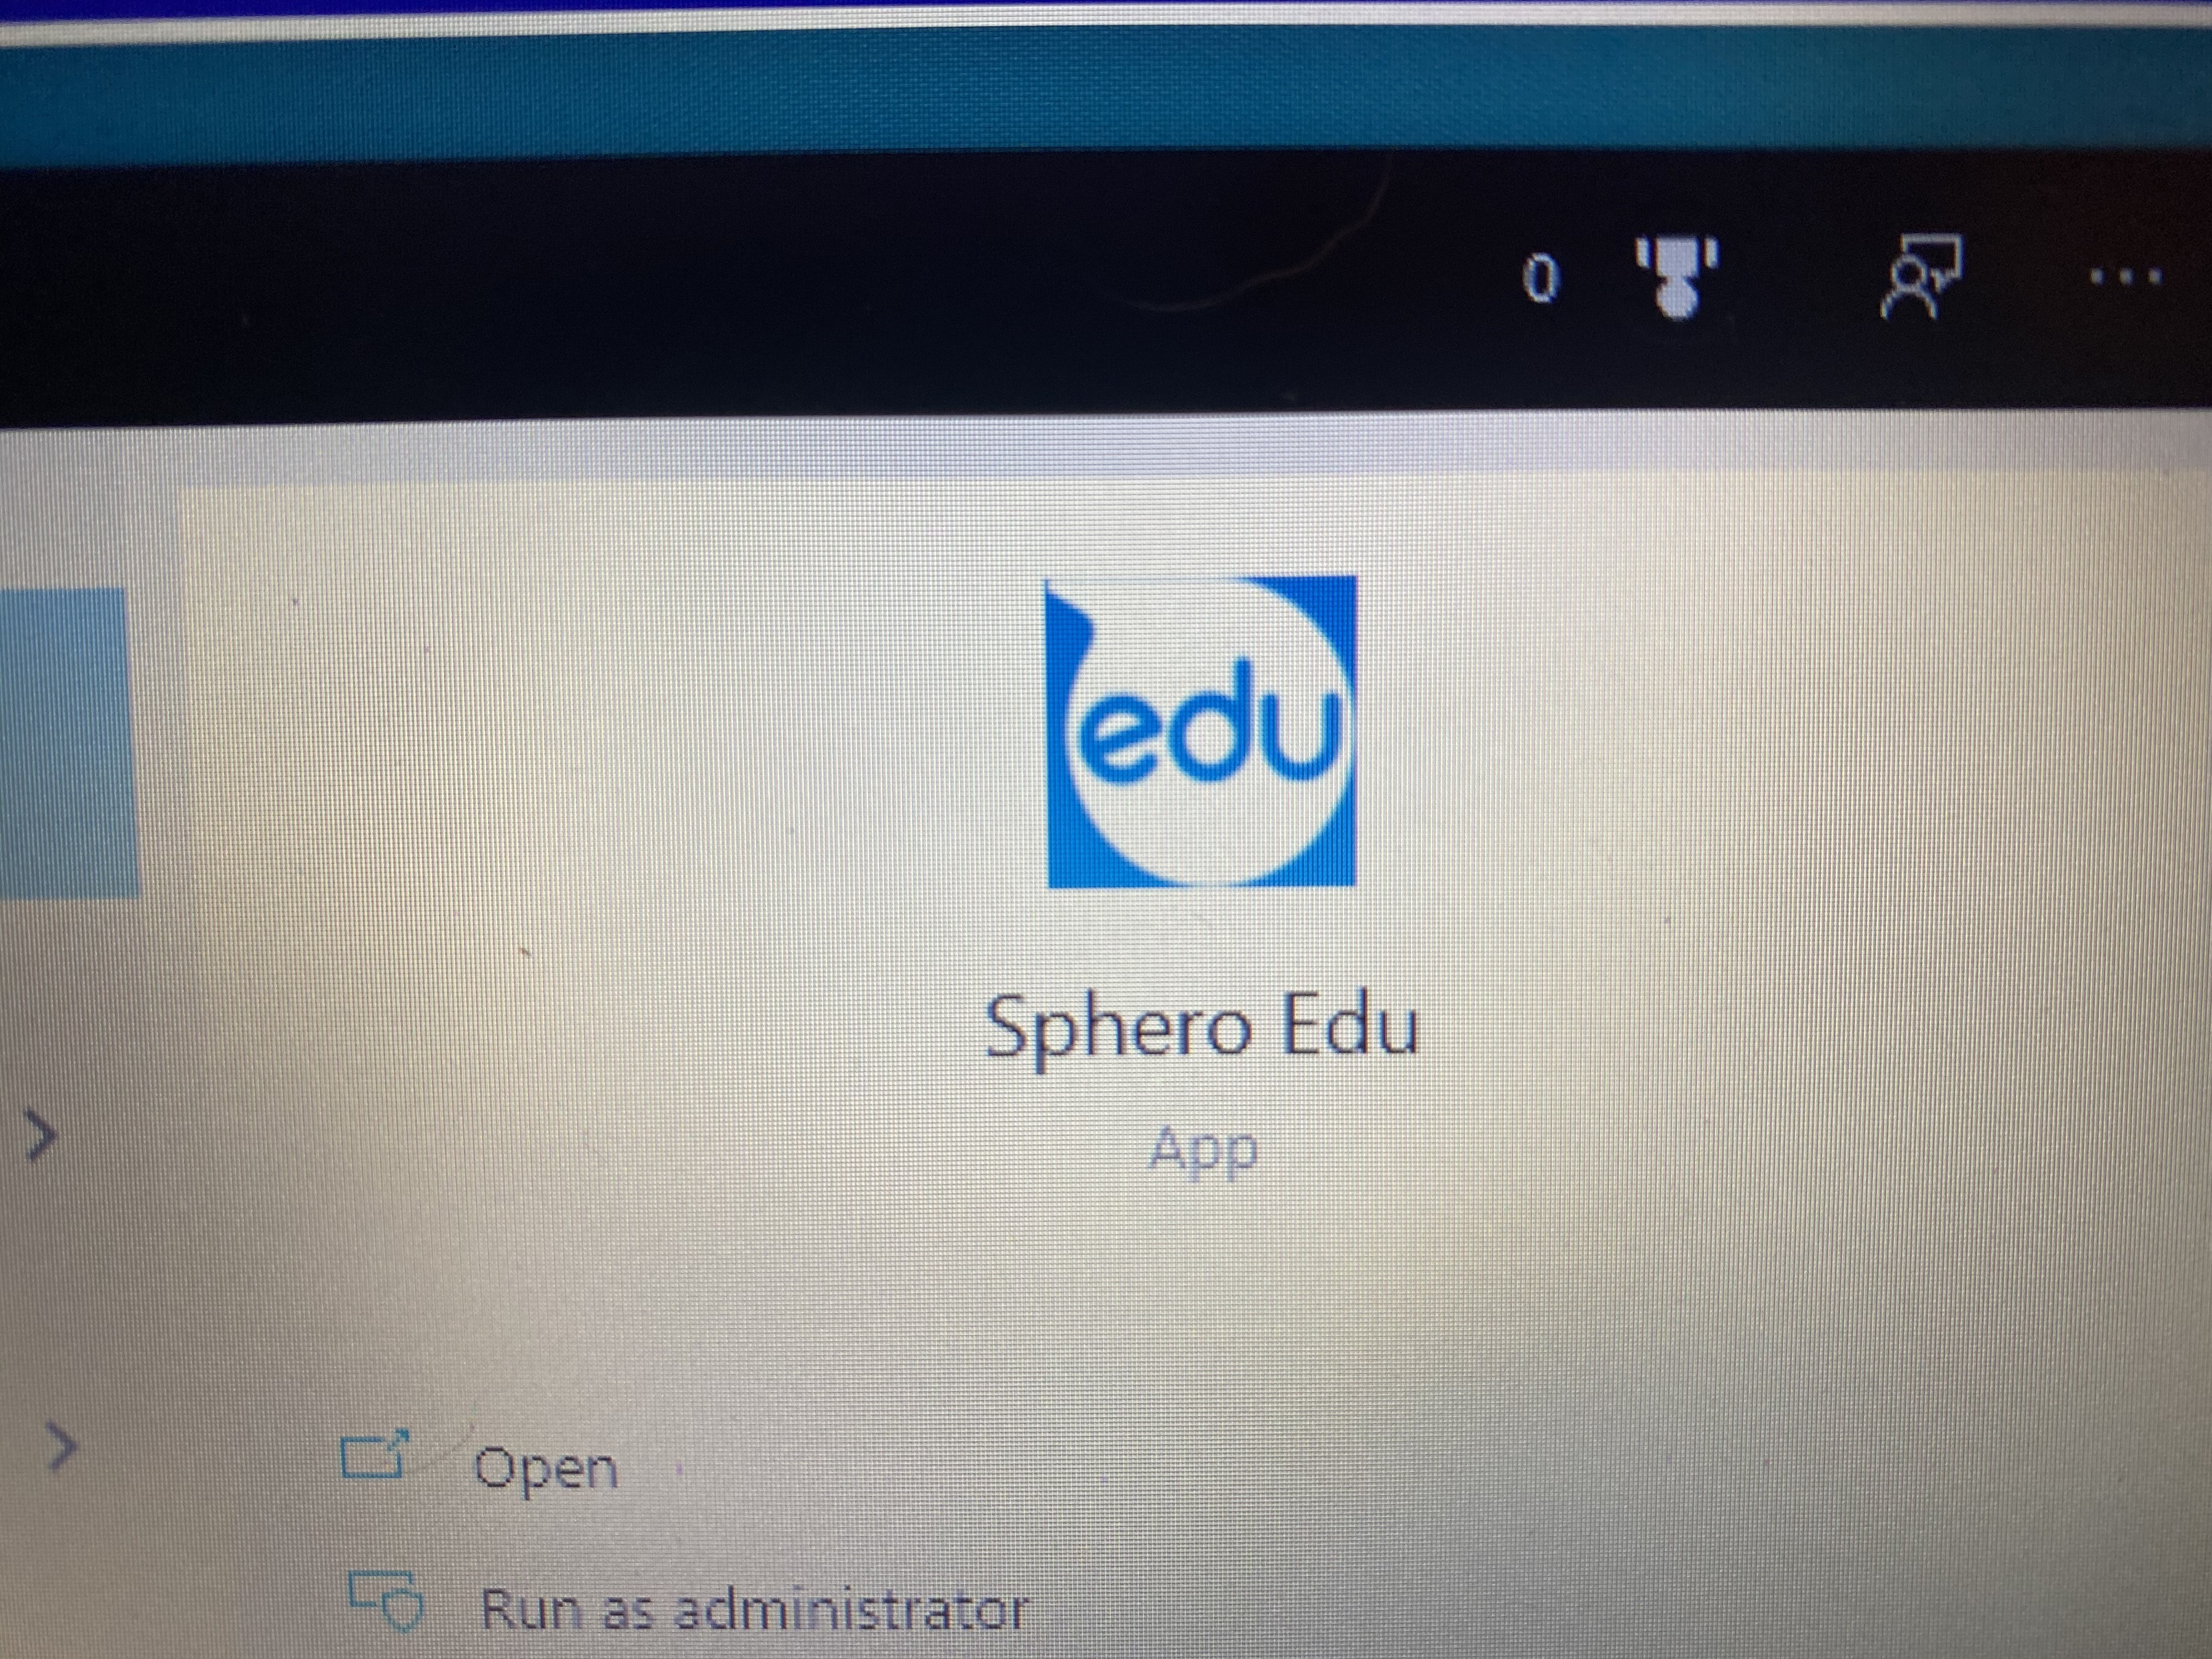 sphero edu app chrome store